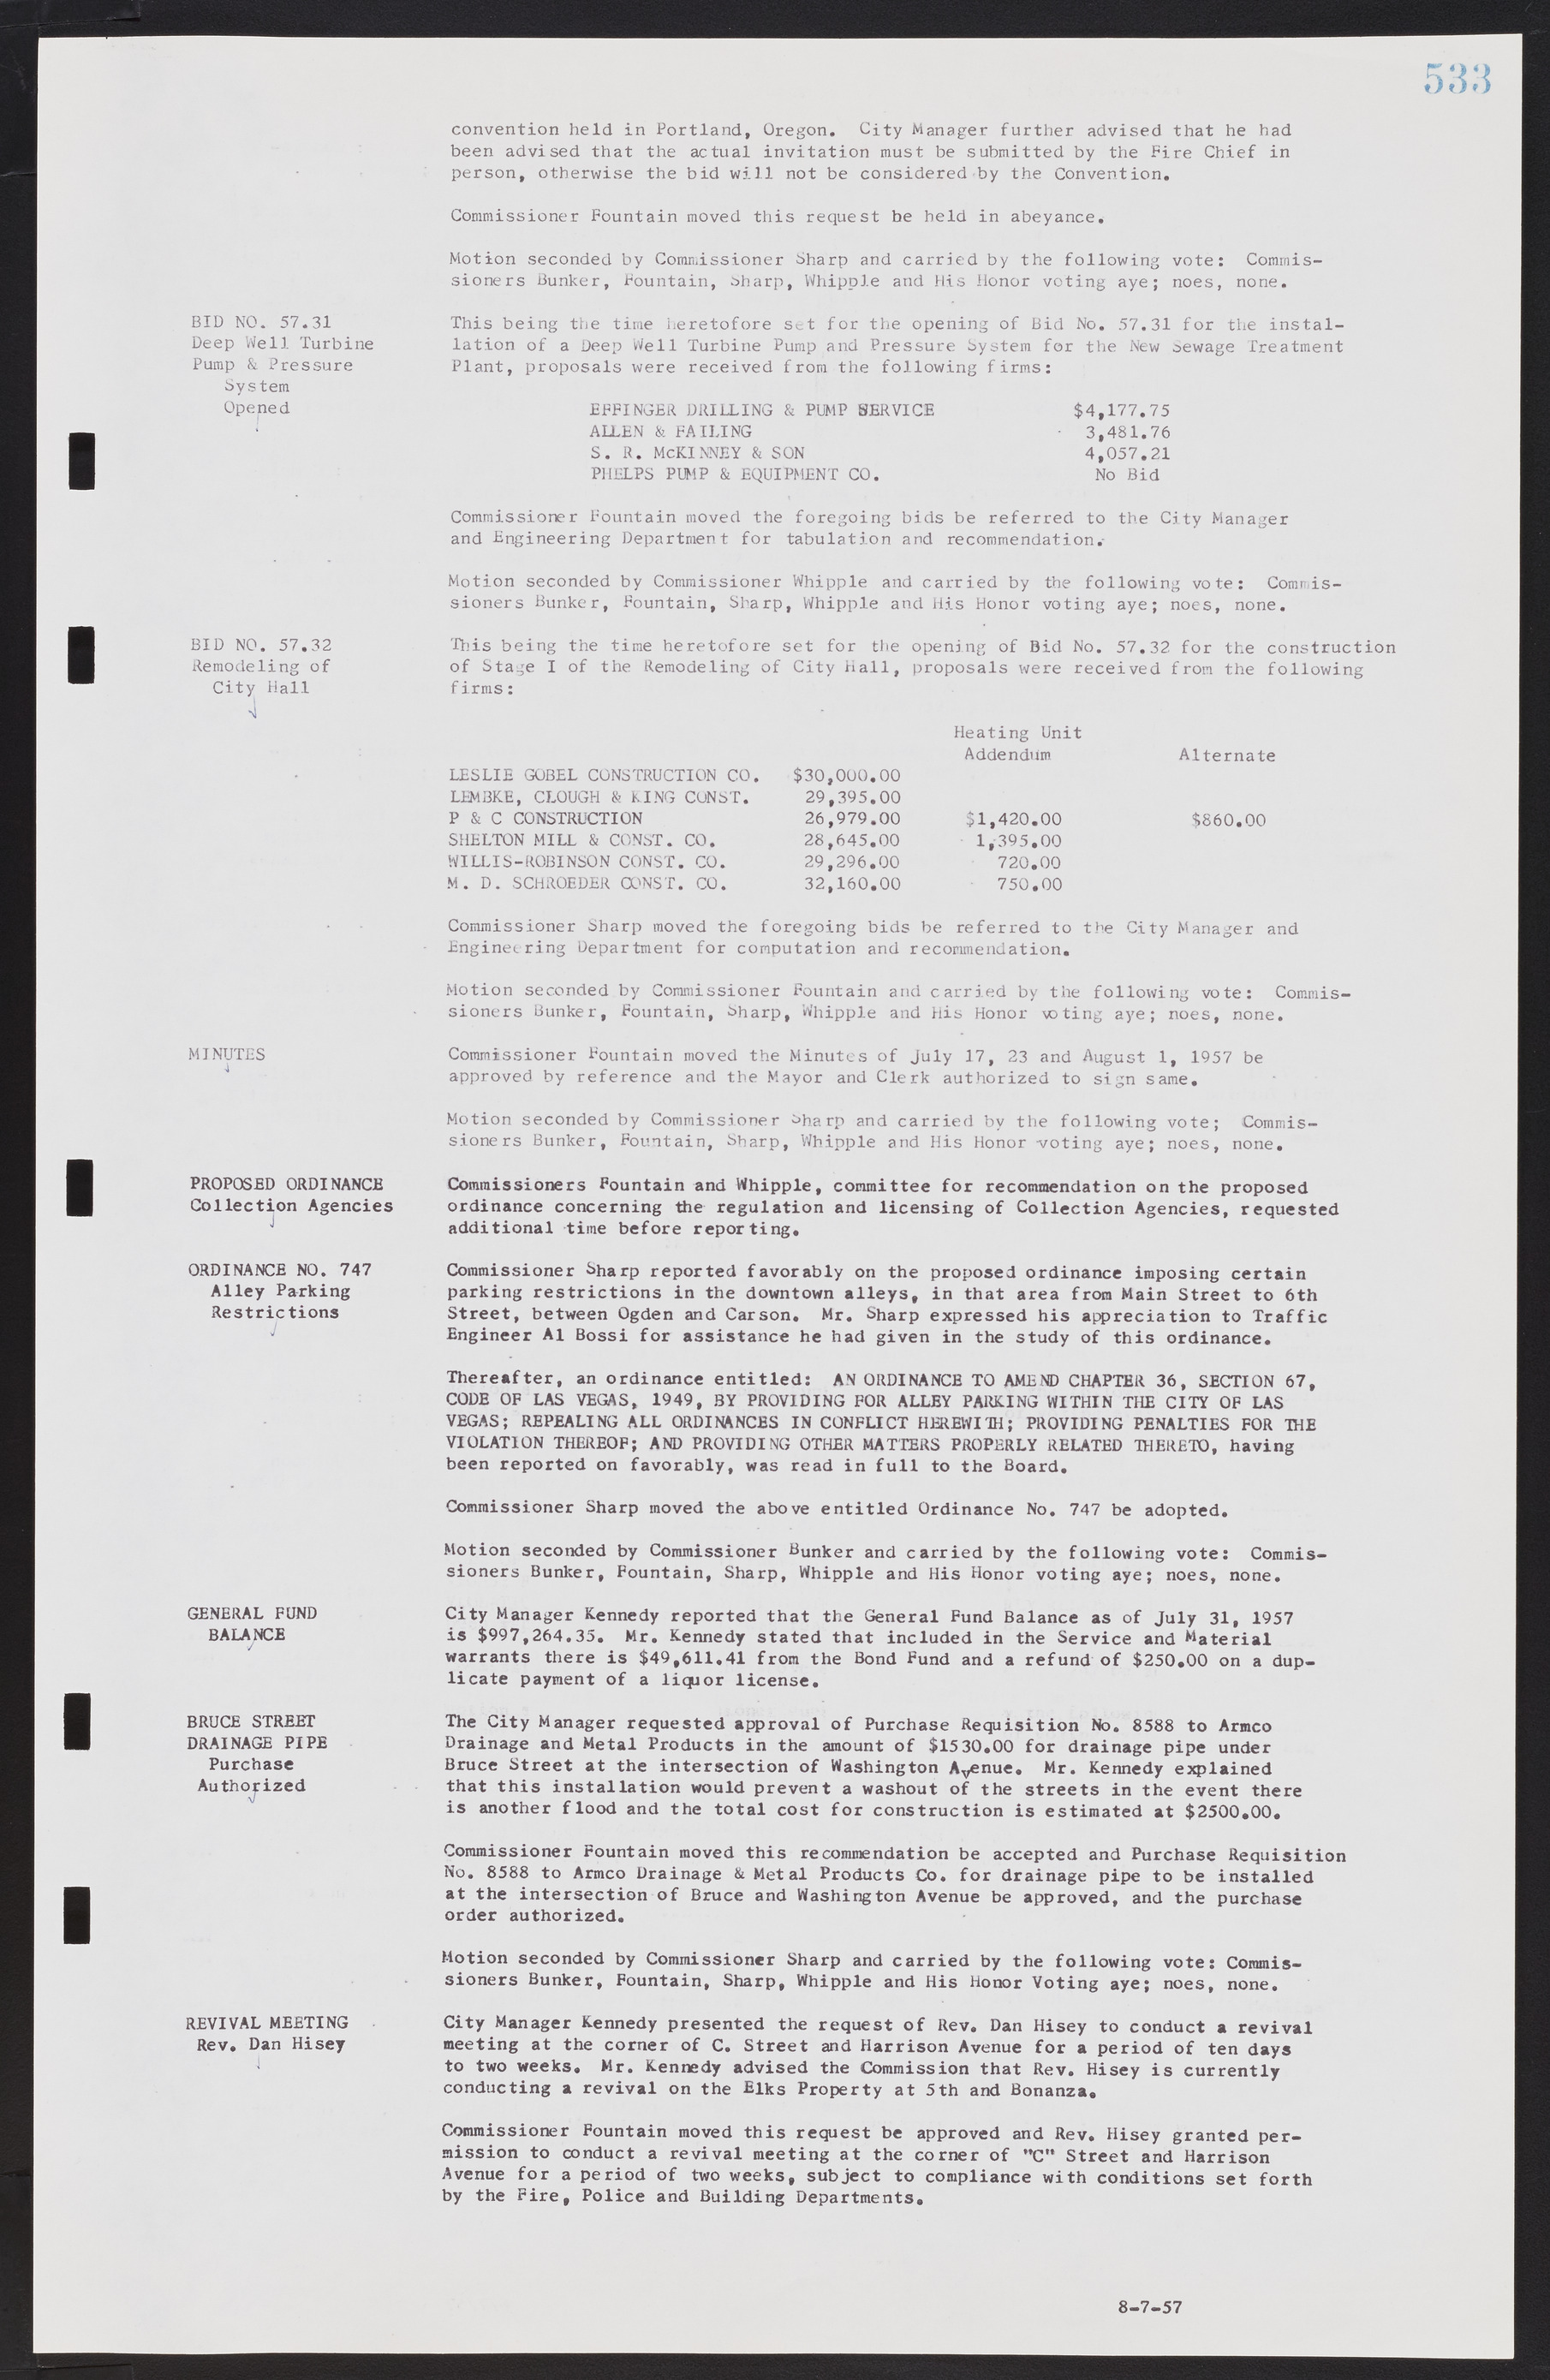 Las Vegas City Commission Minutes, September 21, 1955 to November 20, 1957, lvc000010-553